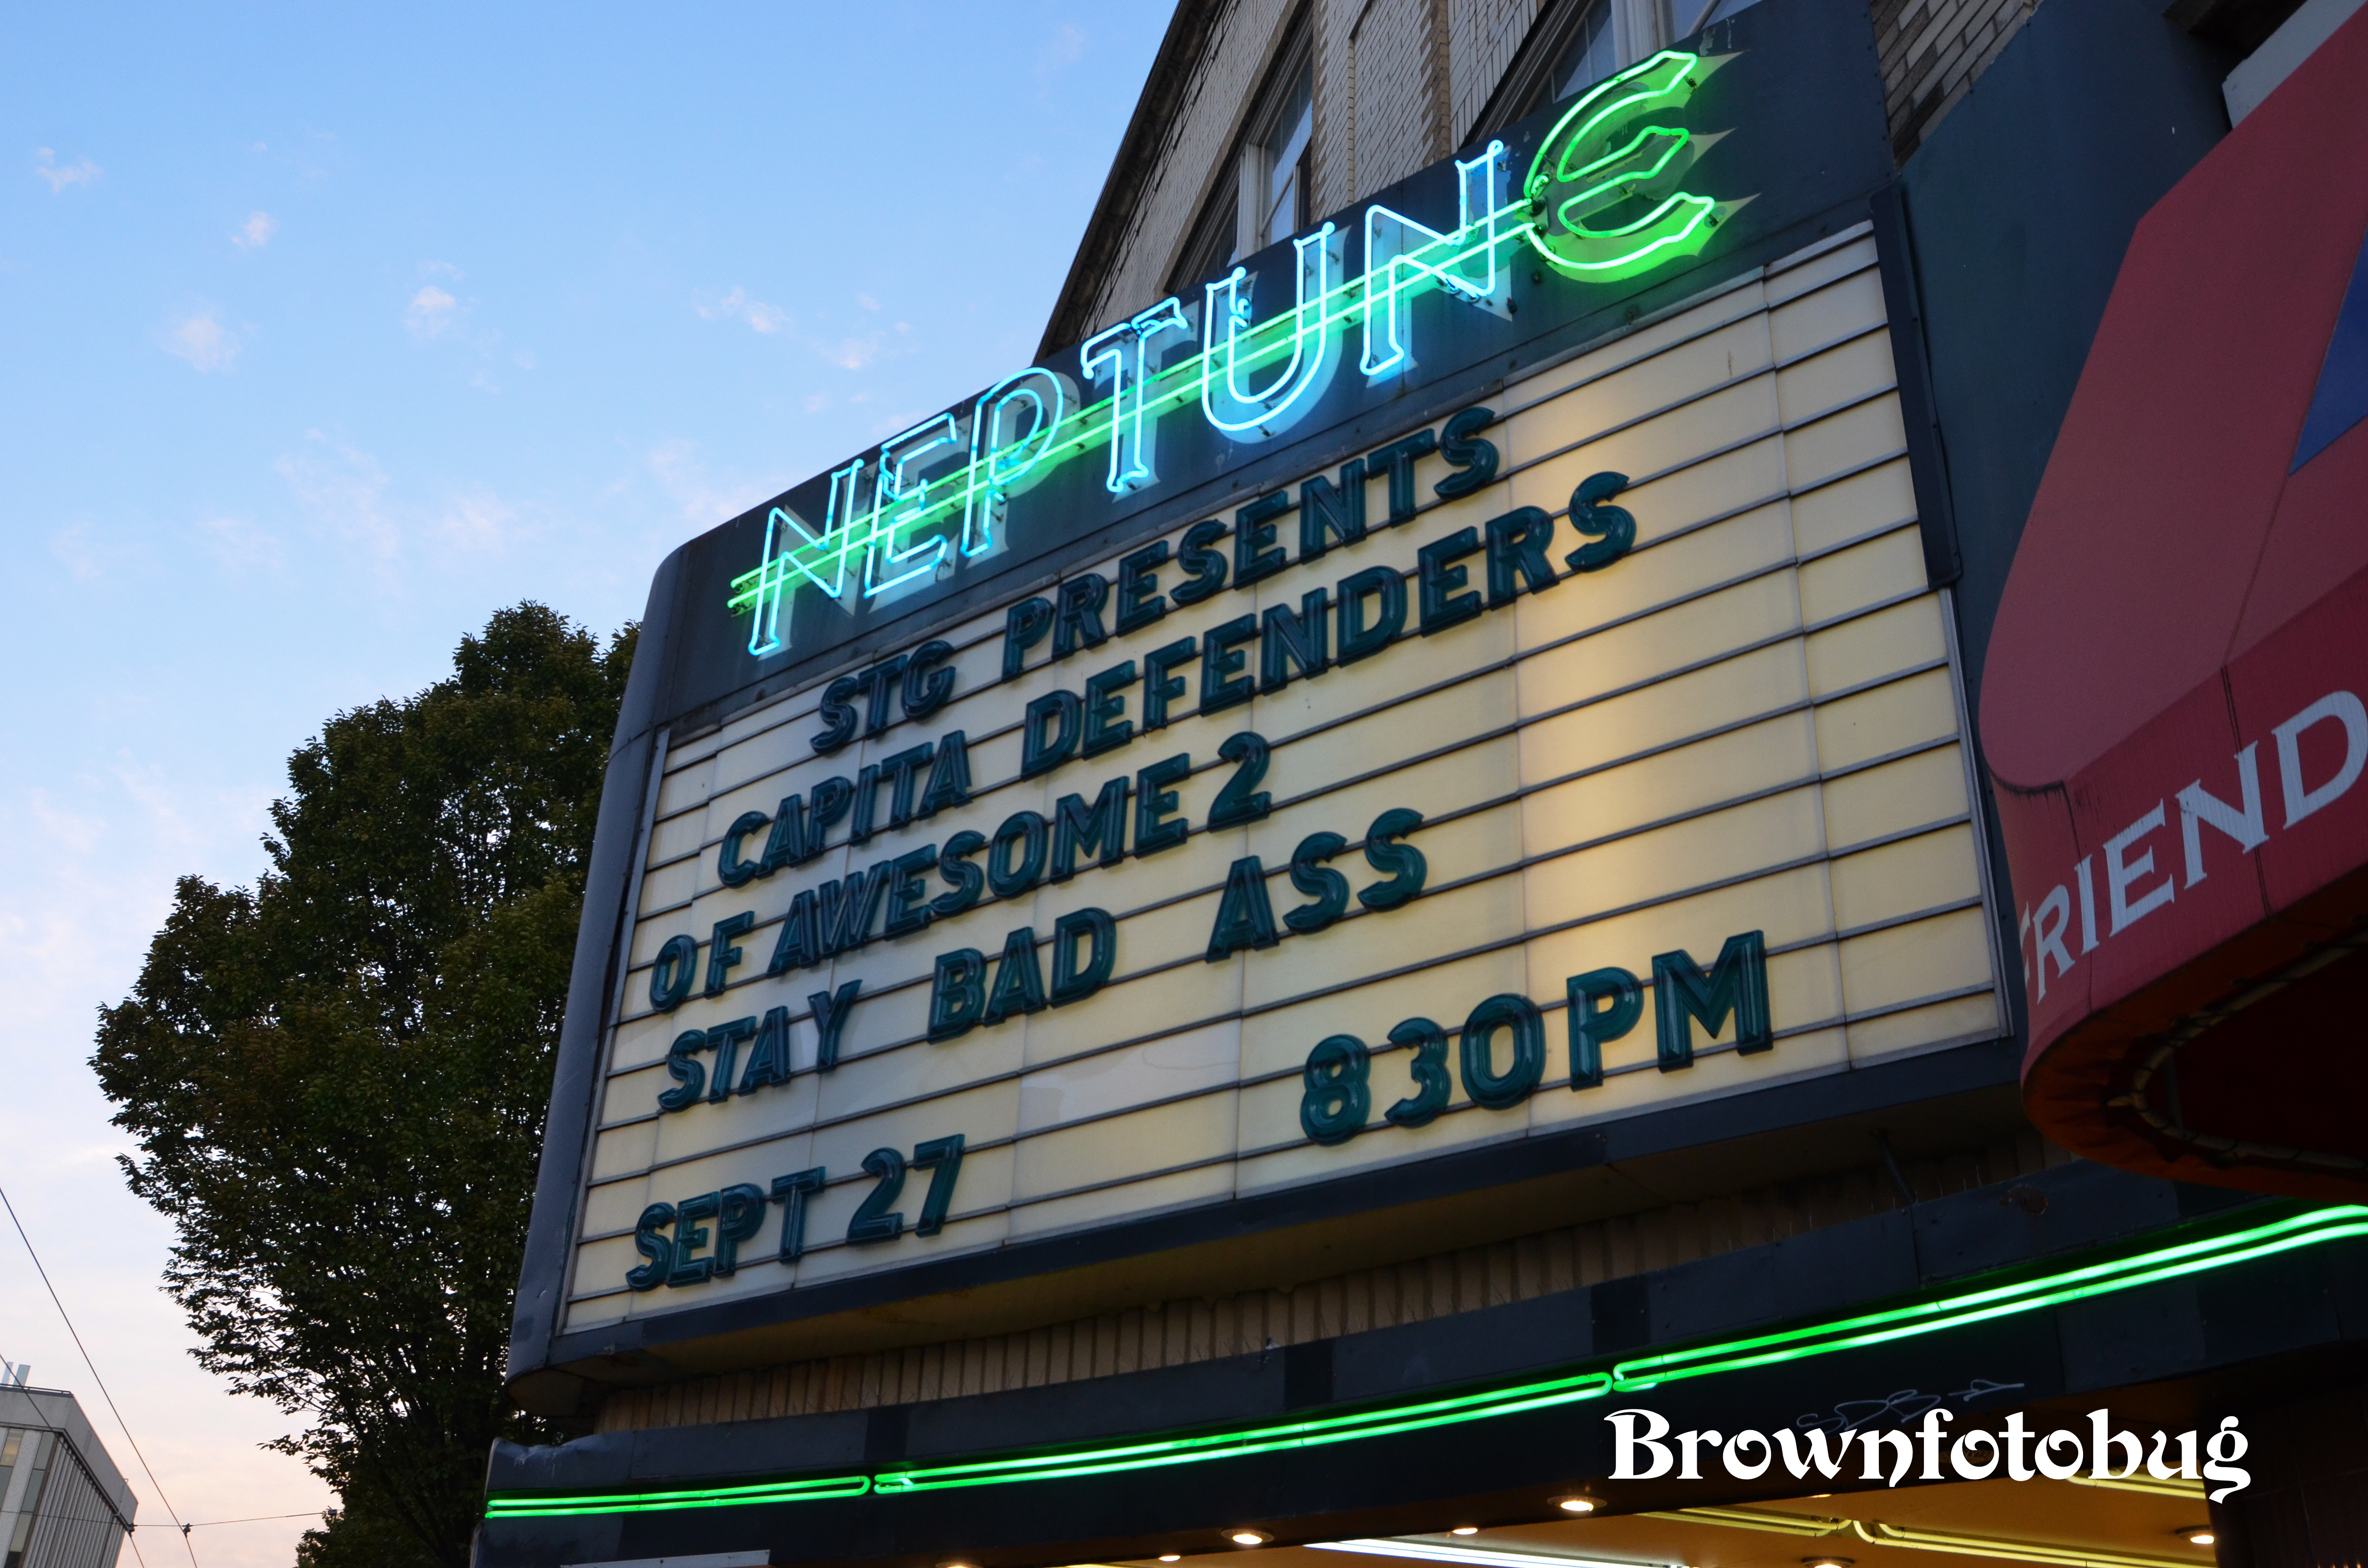 My Goodness at Neptune Theatre CAPiTA! Movie Premier (Photo by Arlene Brown)